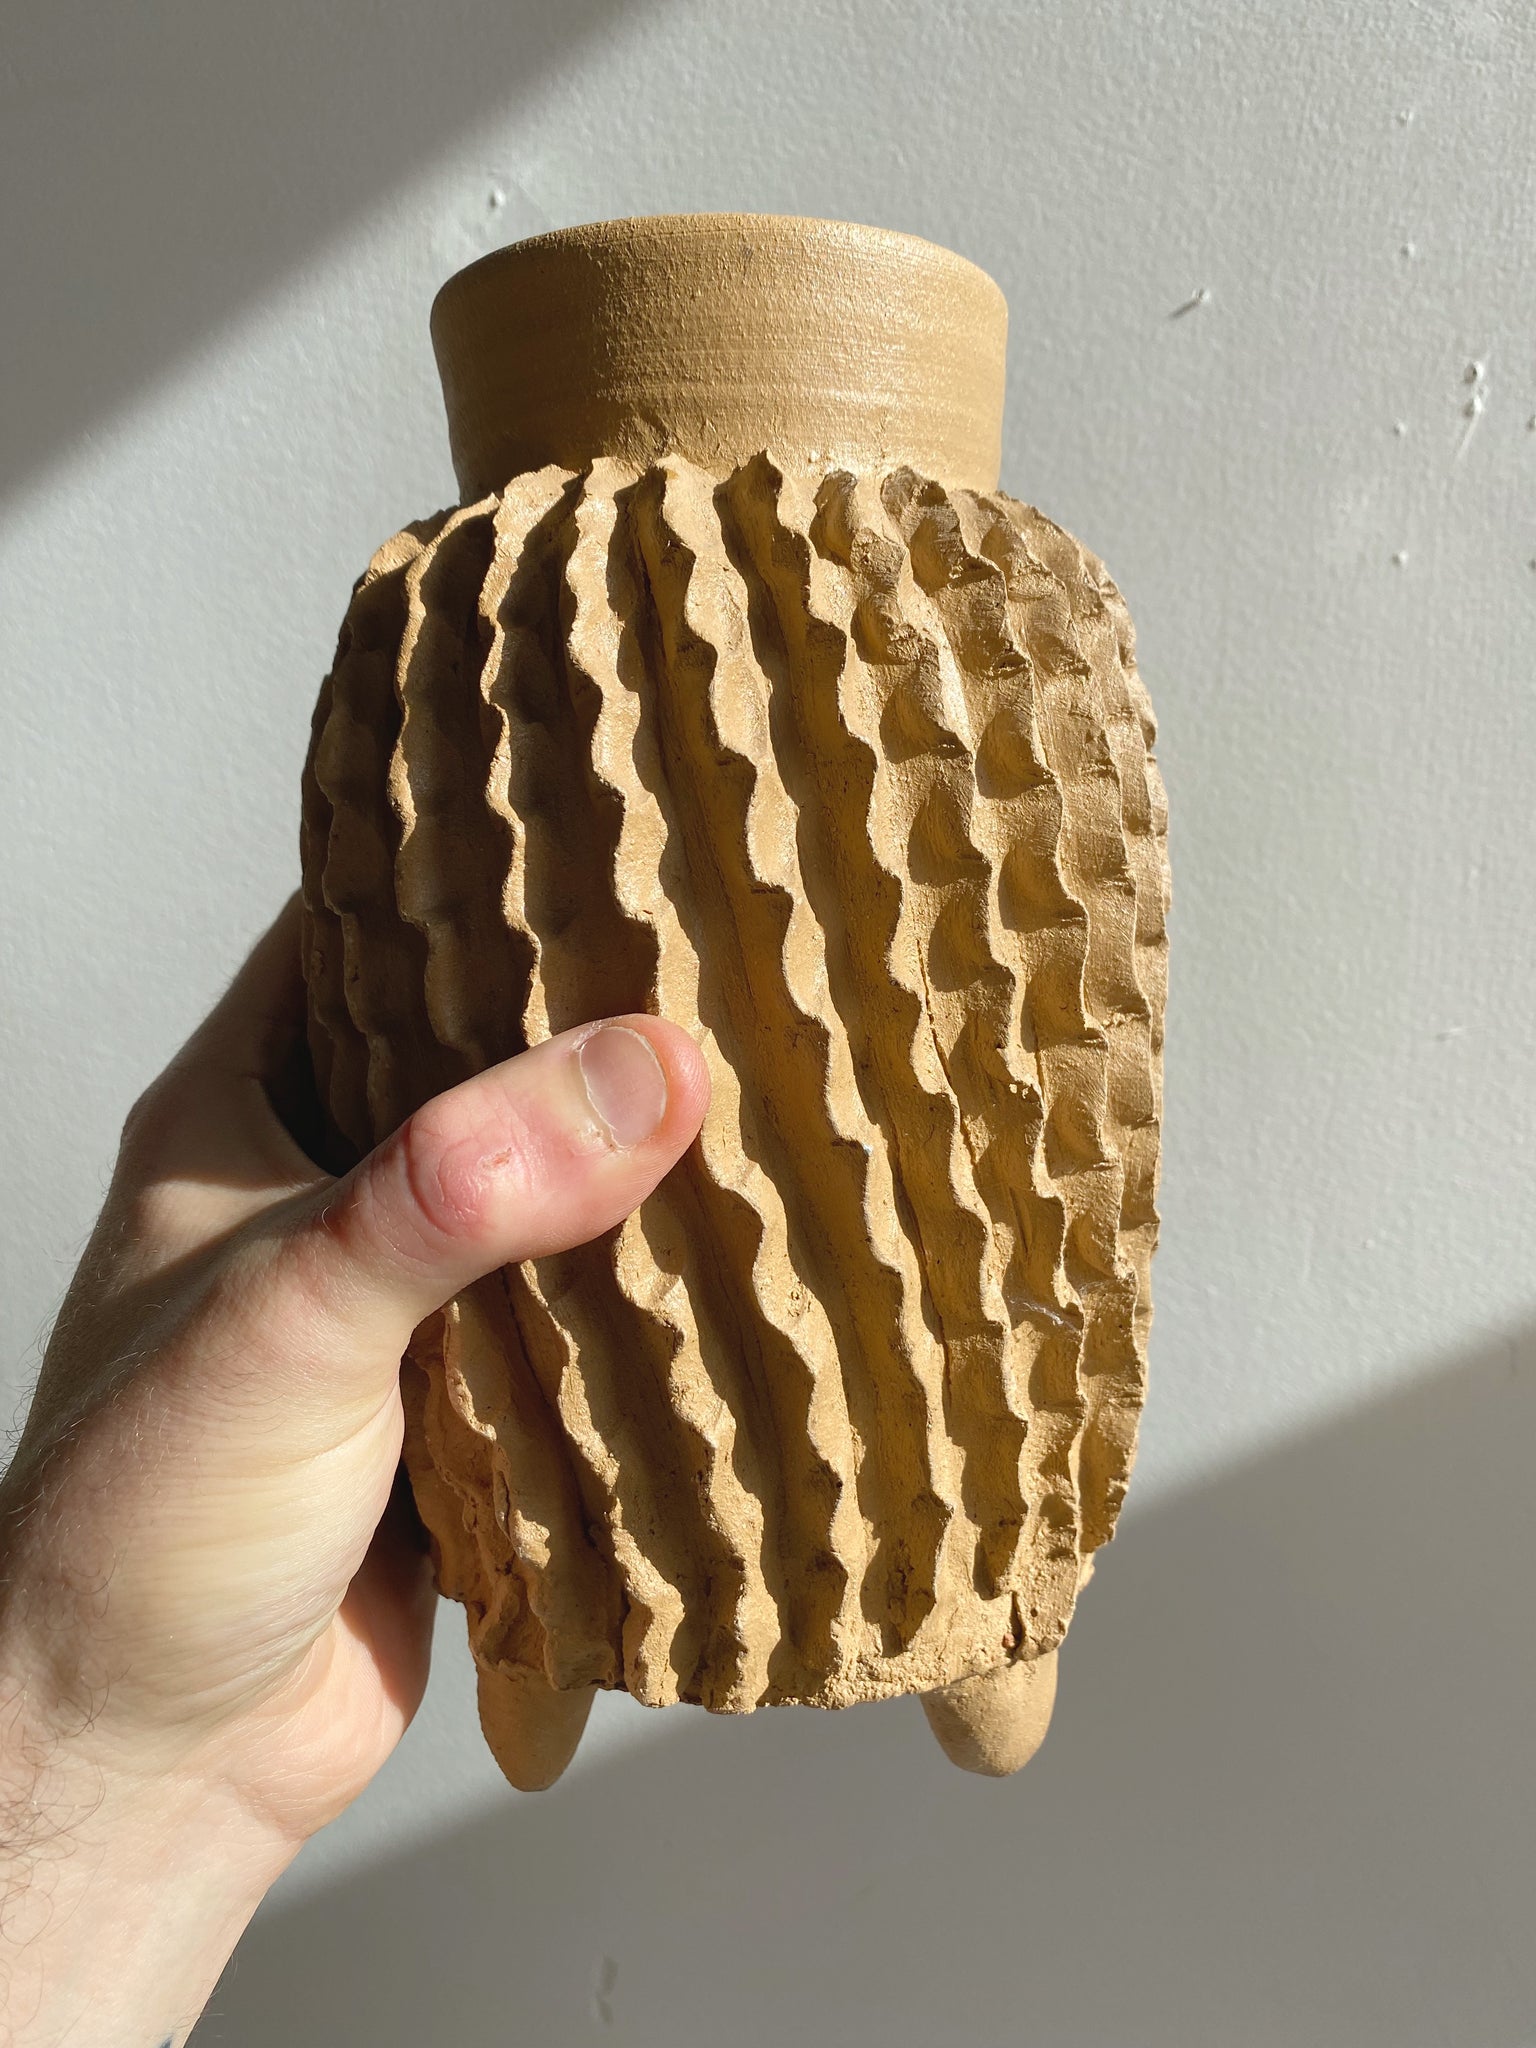 Handmade Barrel Cactus Clay Planter/Sculpture